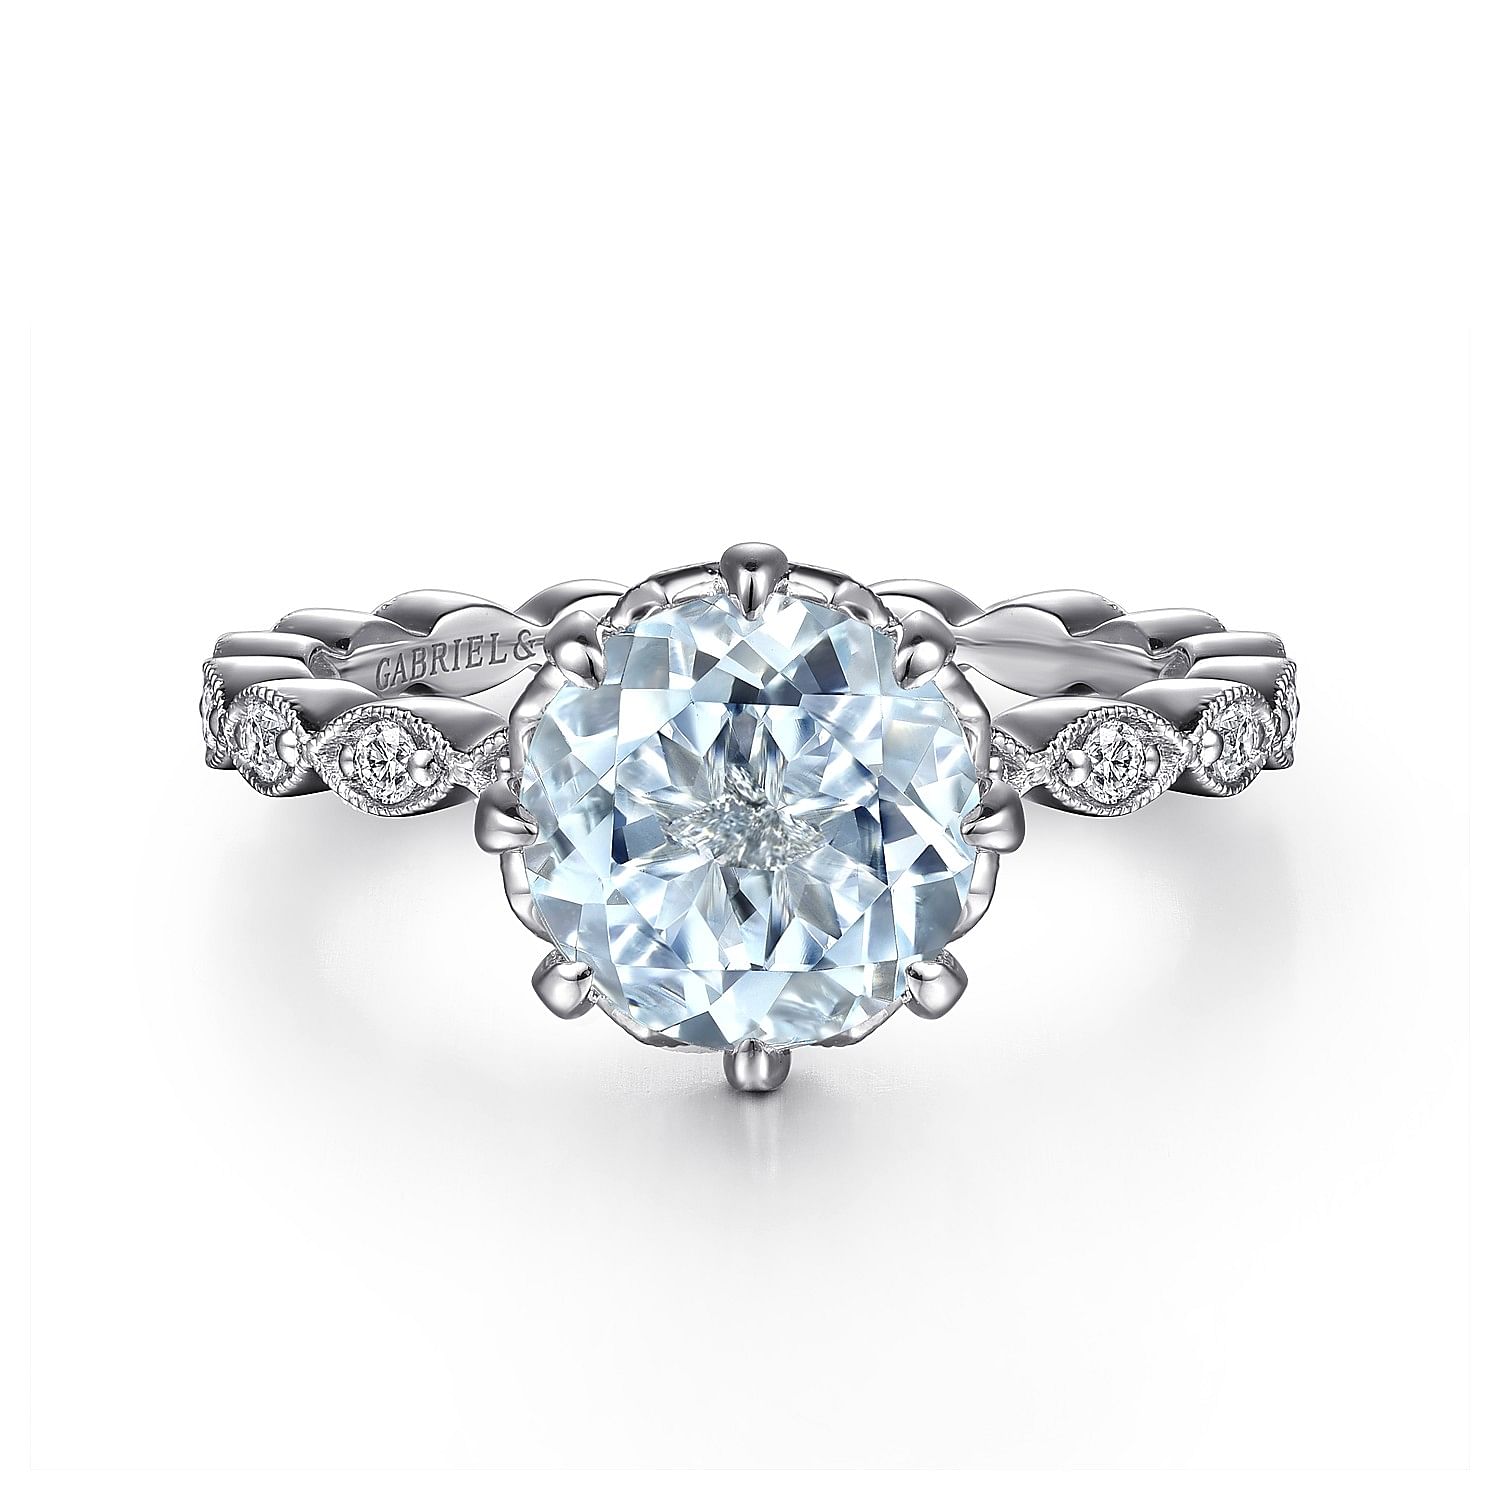 Vintage Inspired 14K White Gold Aquamarine and Diamond Engagement Ring